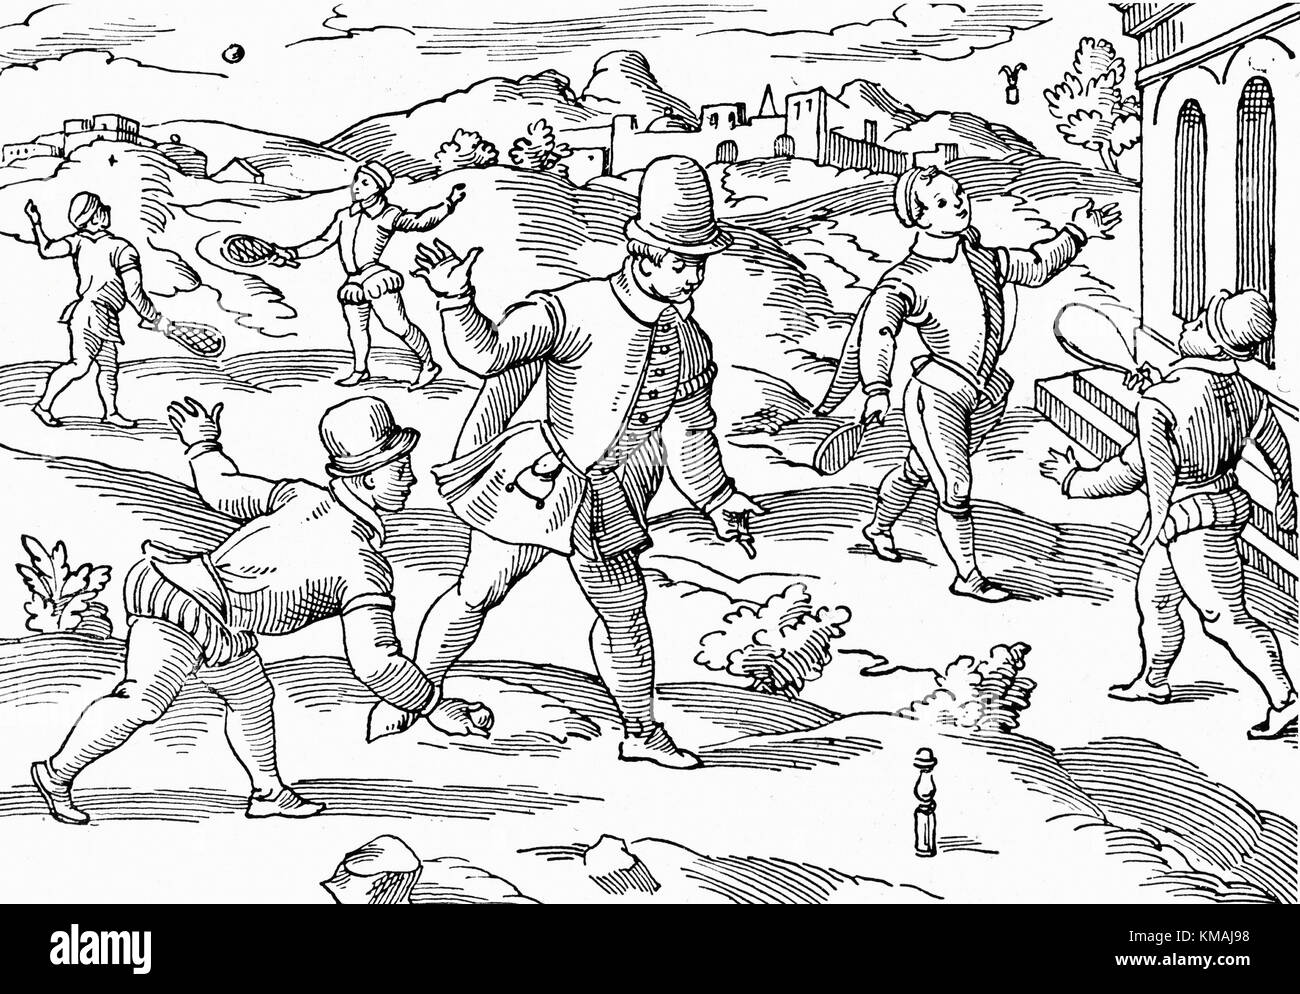 Children's games in 16th century - British engraving Stock Photo